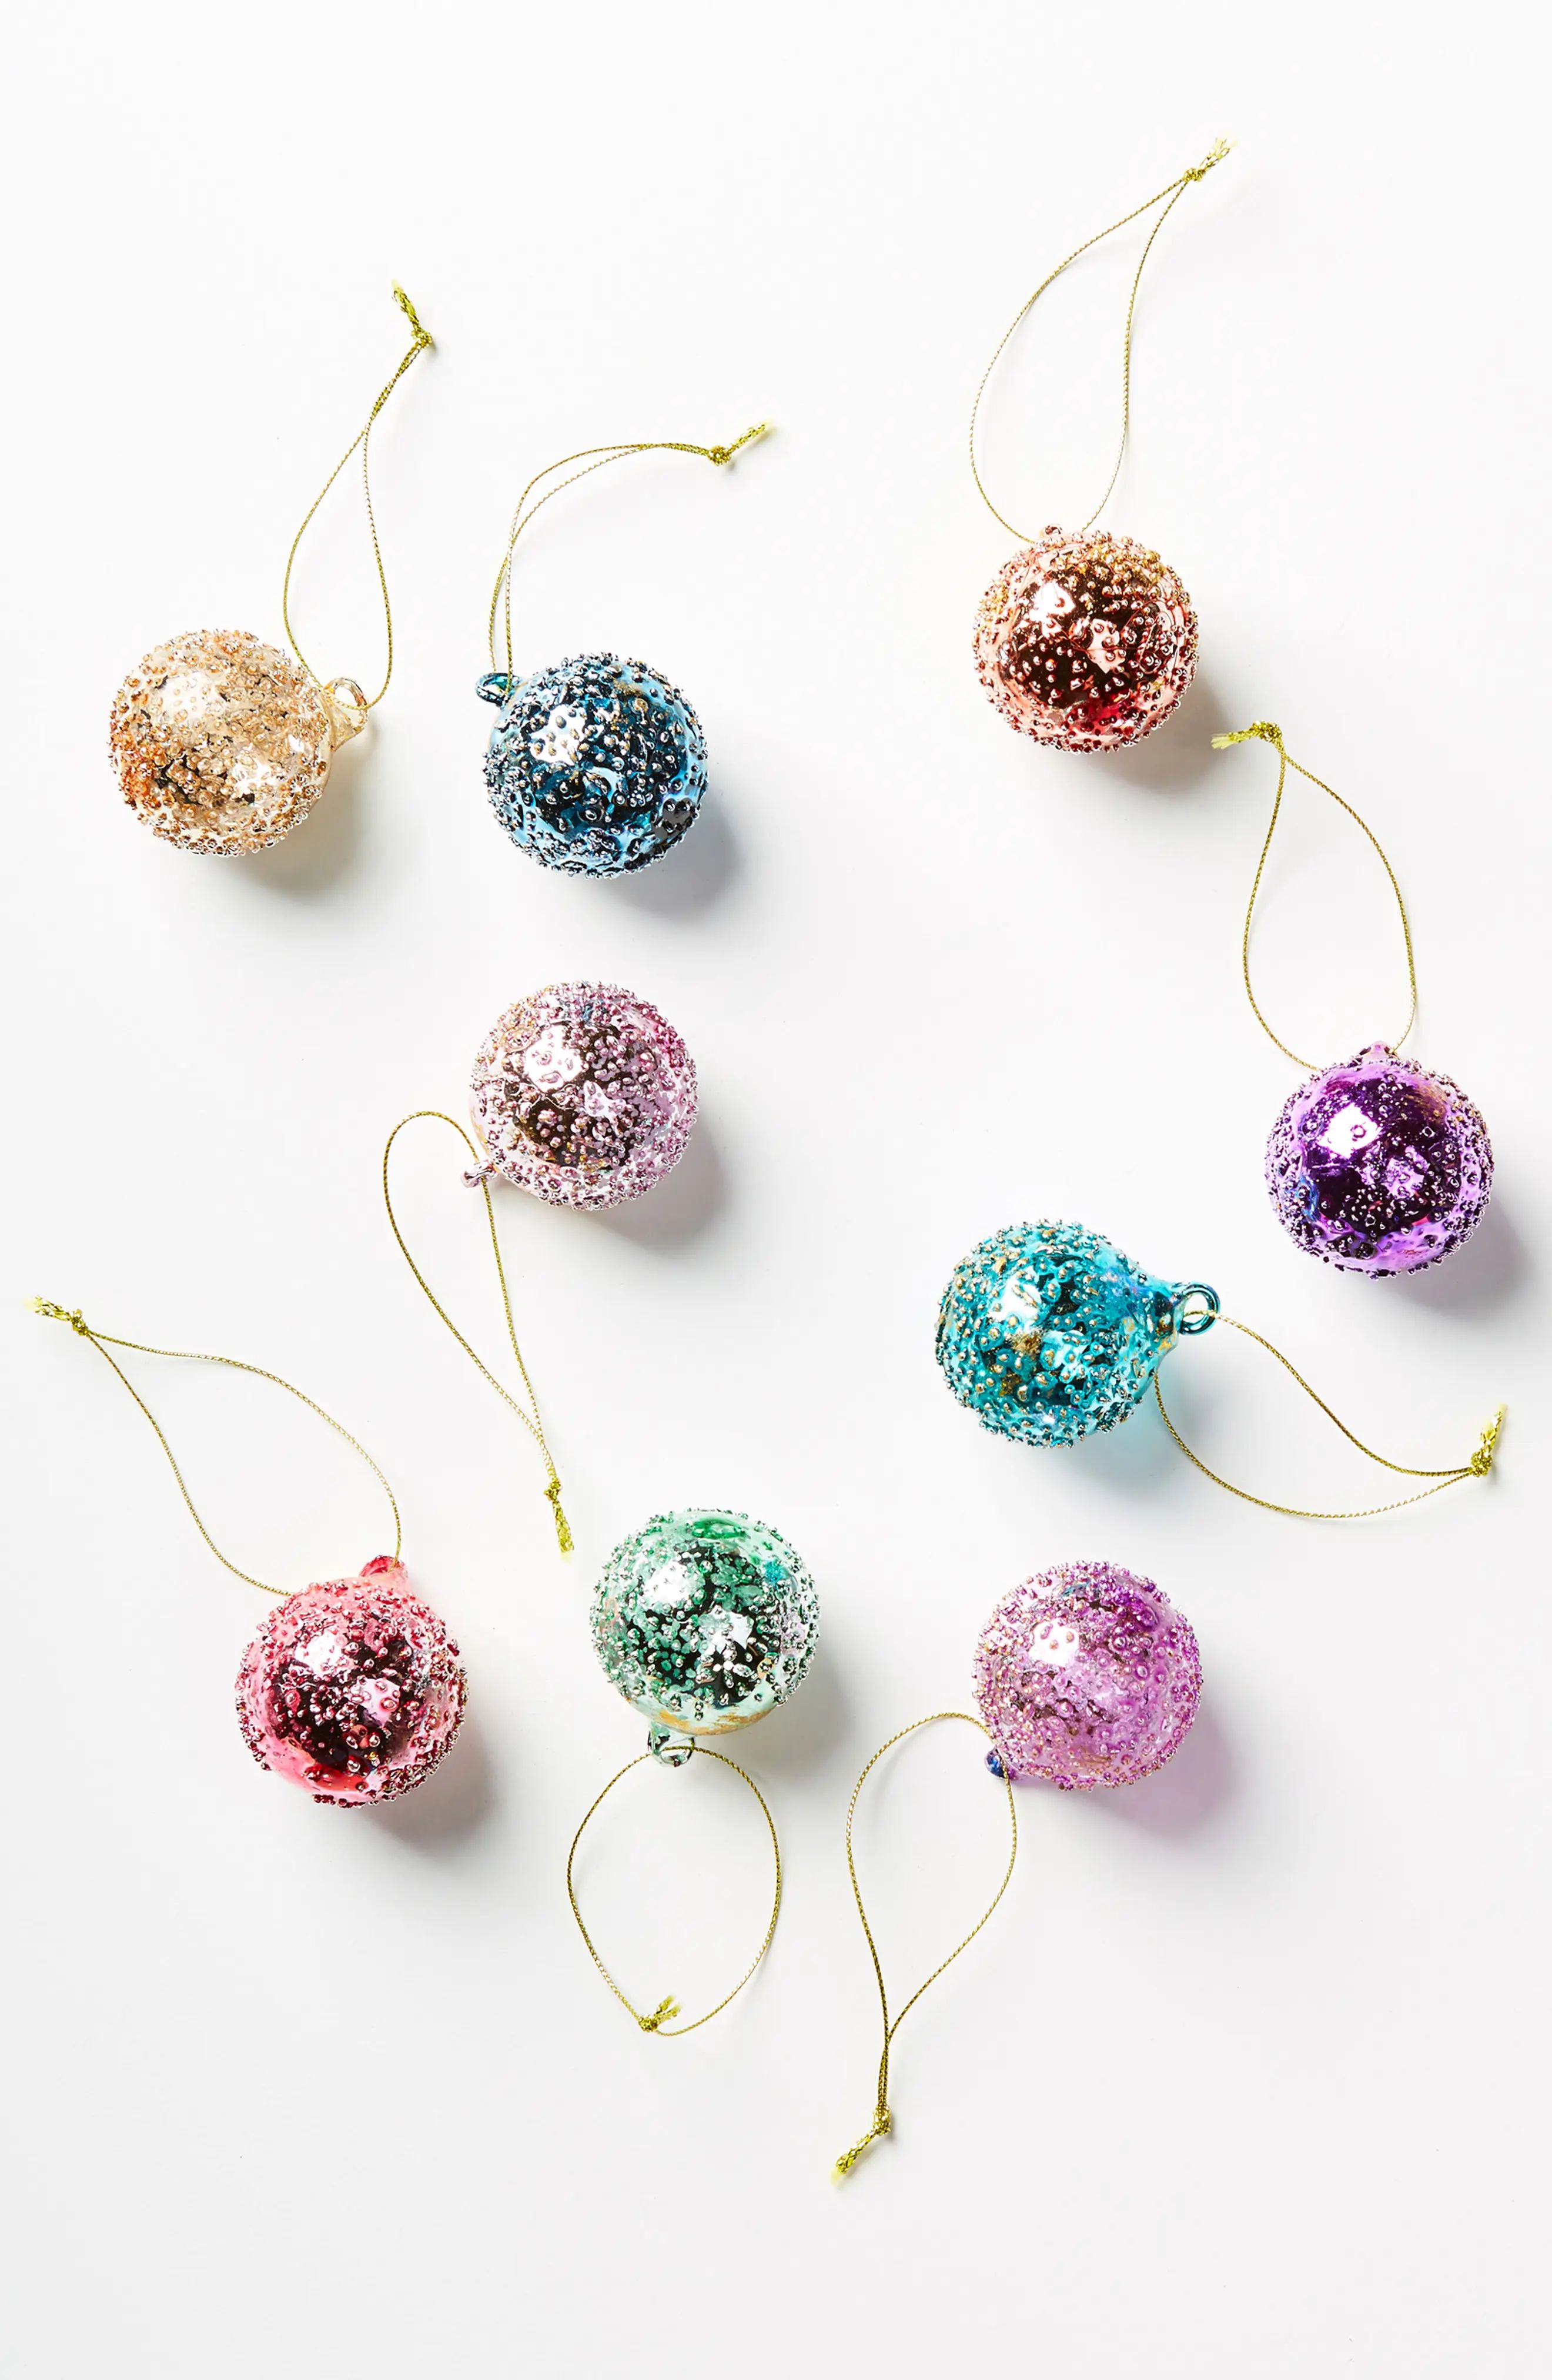 Anthropologie Dewy Set of 9 Metallic Glass Ball Ornaments | Nordstrom